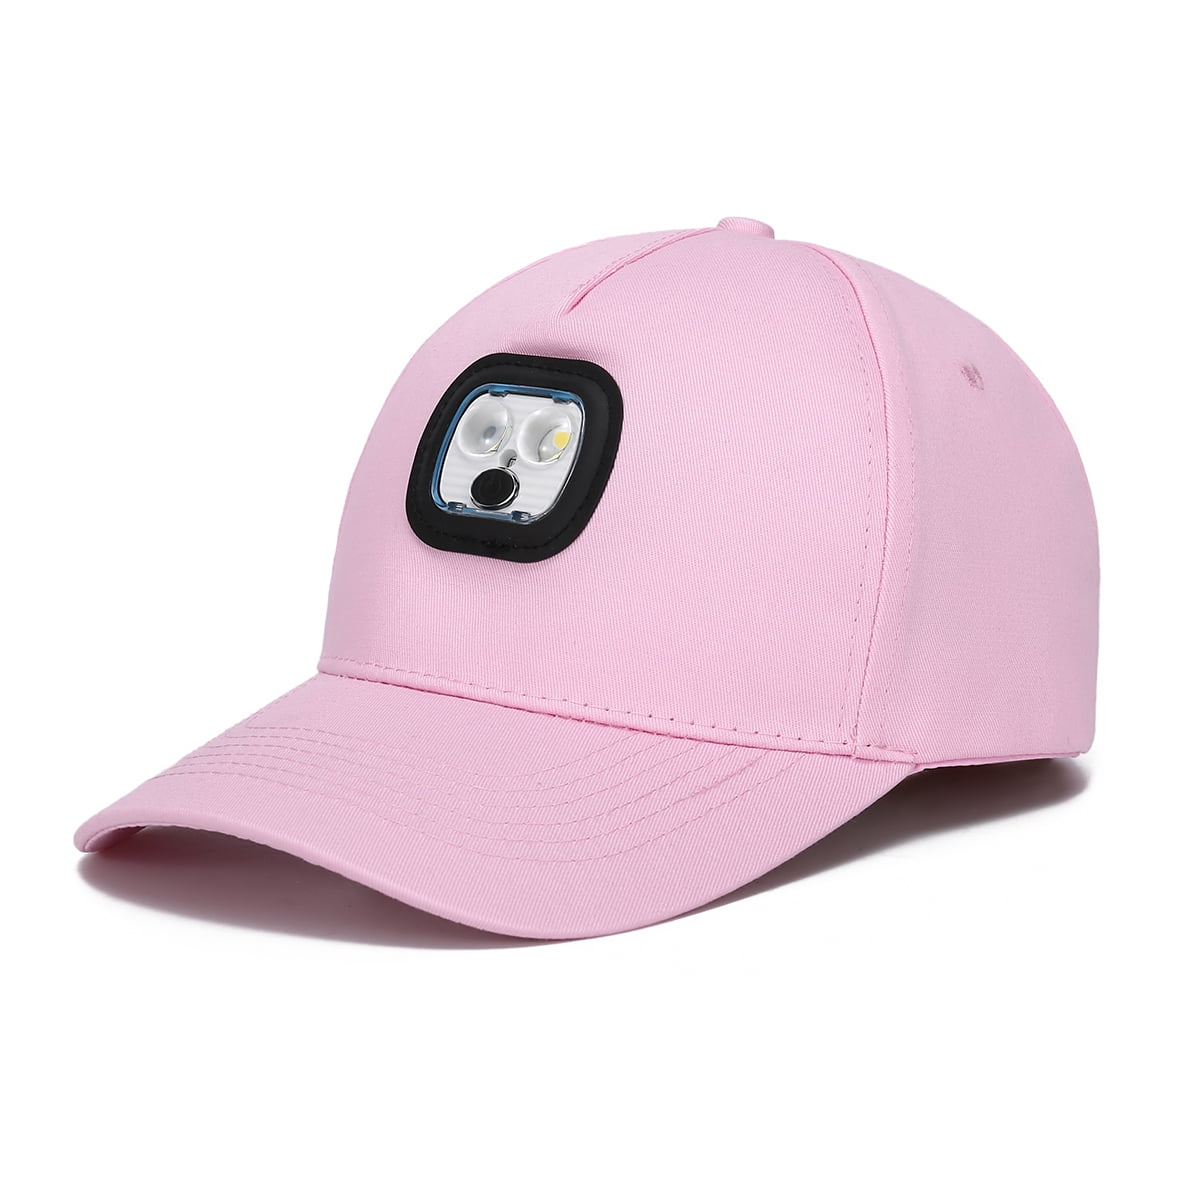 Iljndtgbe Women's Sun Hat UV Protection Beach Fishing Hat Youth Trucker Cap with Adjustable Snapback unisex Kids Breathable Baseball Cap Hat, Boy's